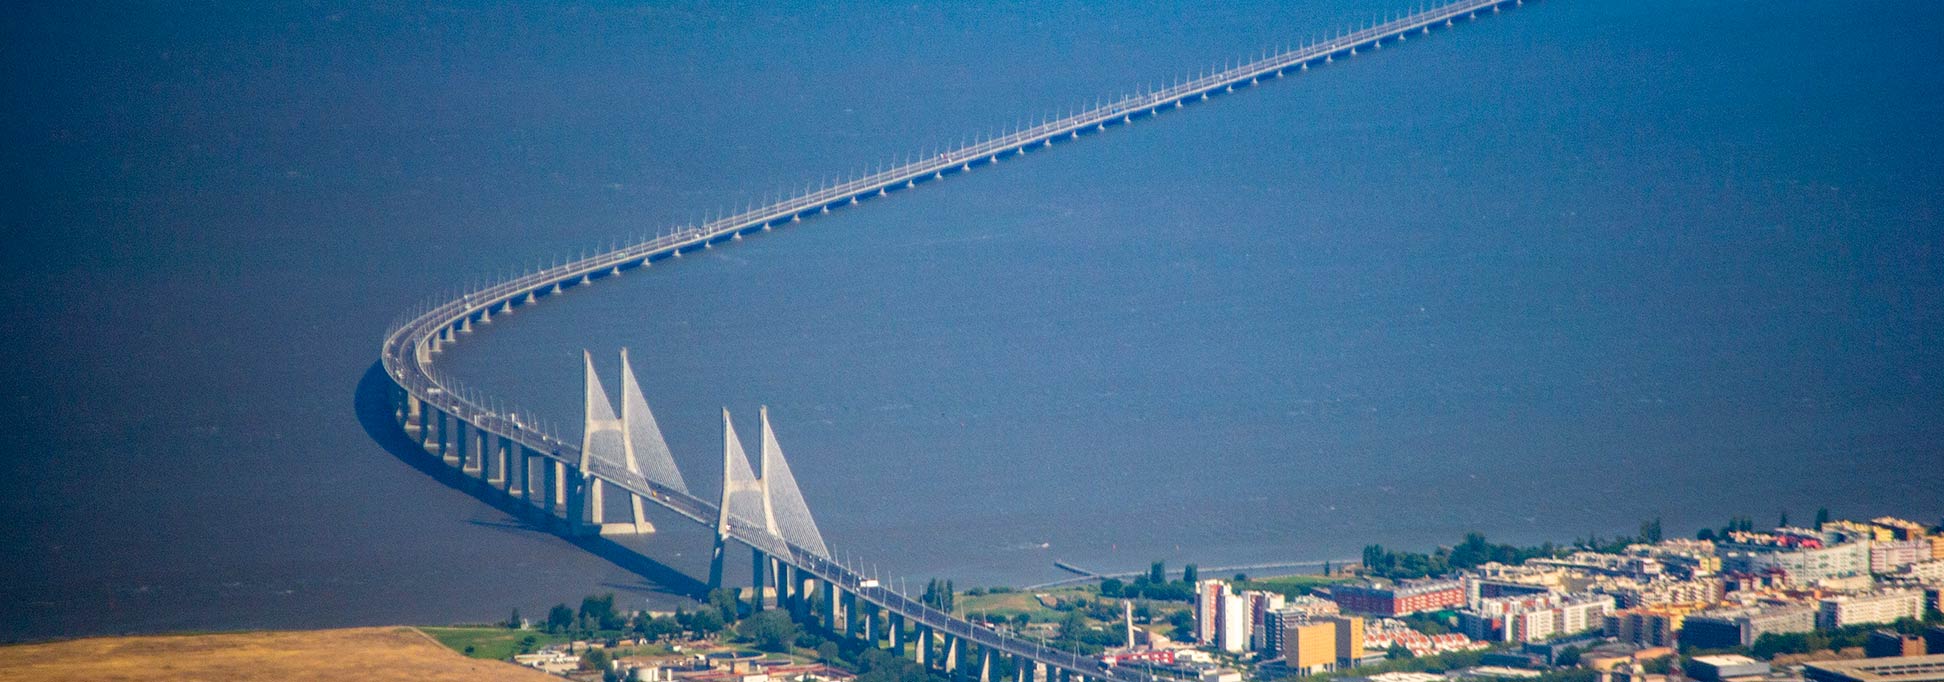 Over the clouds - back to earth. Vasco da Gama Bridge, Lisbon, Portugal